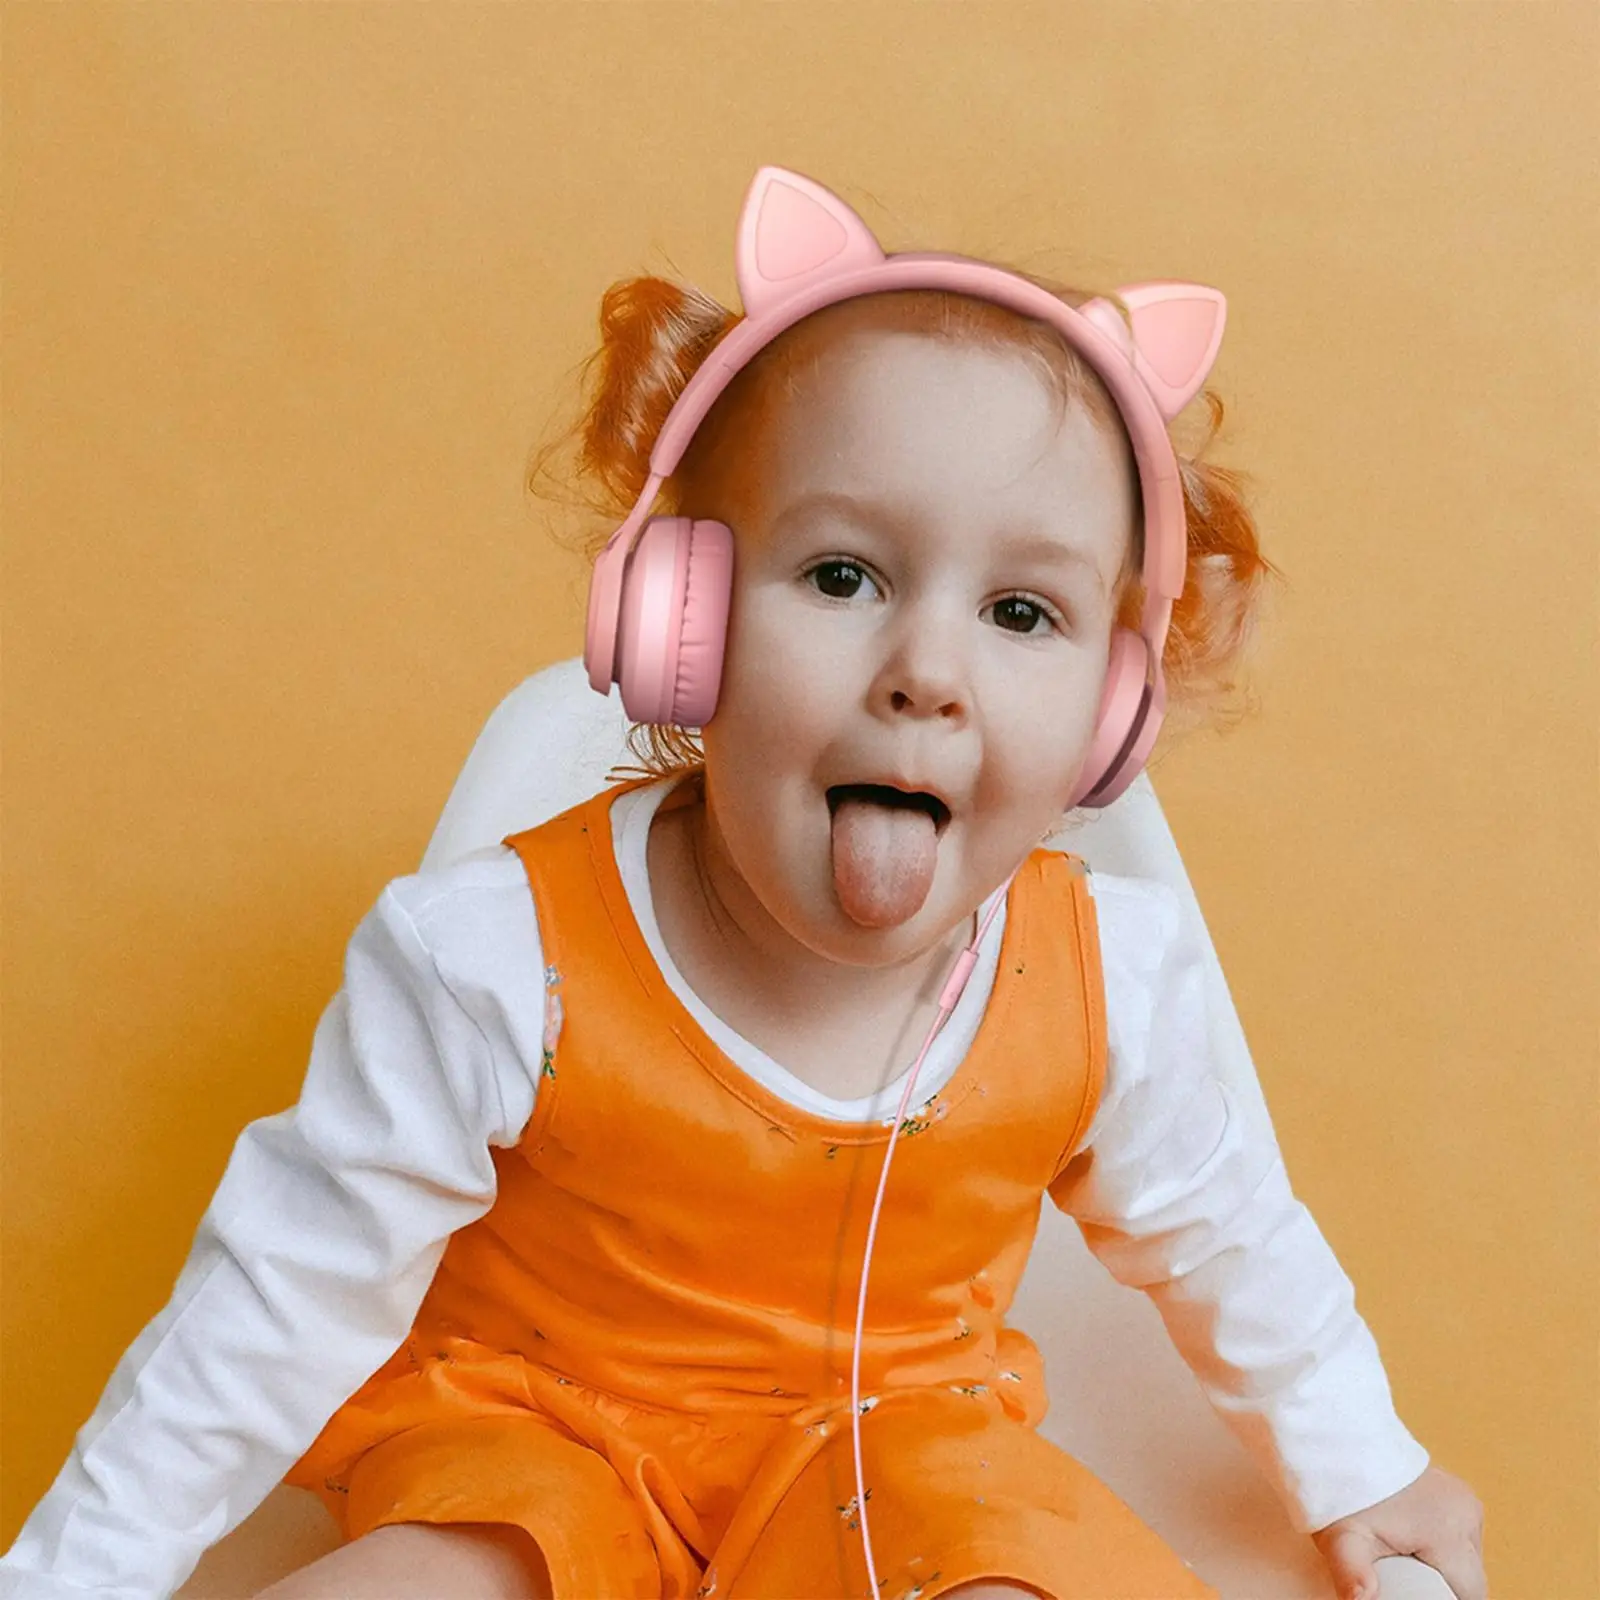 Kids  Headphone Earmuffs Earphone  Headset for Laptop Moble Phone Adult